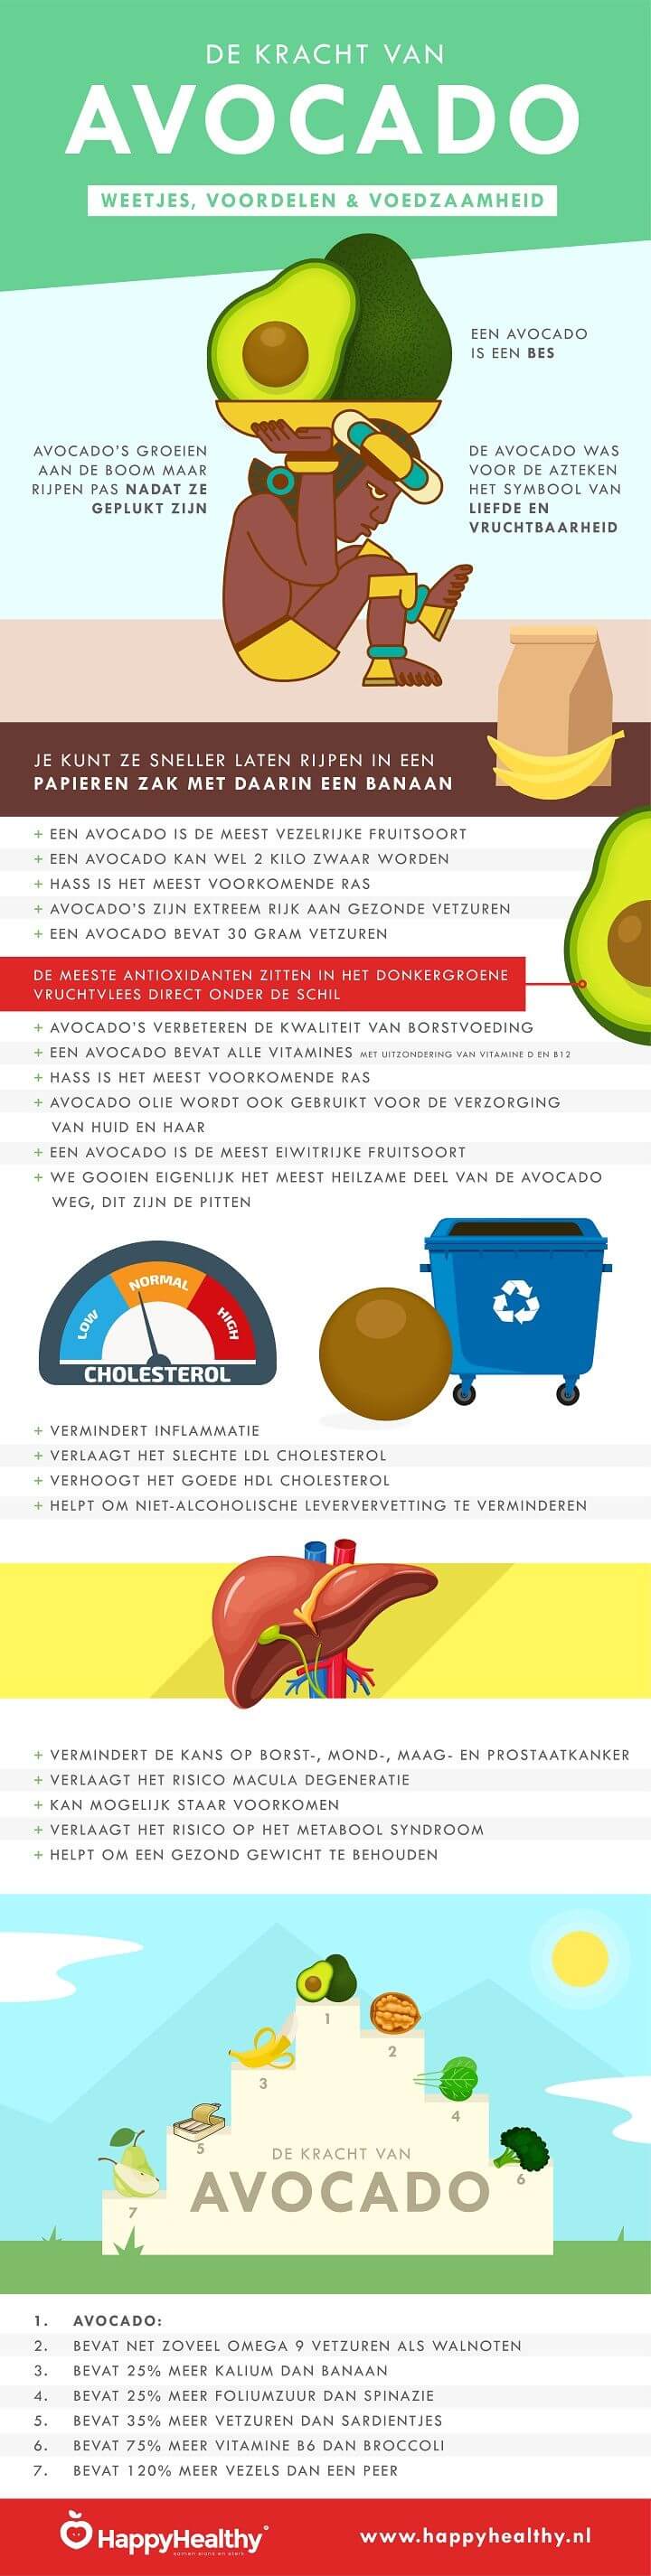 Avocado infographic